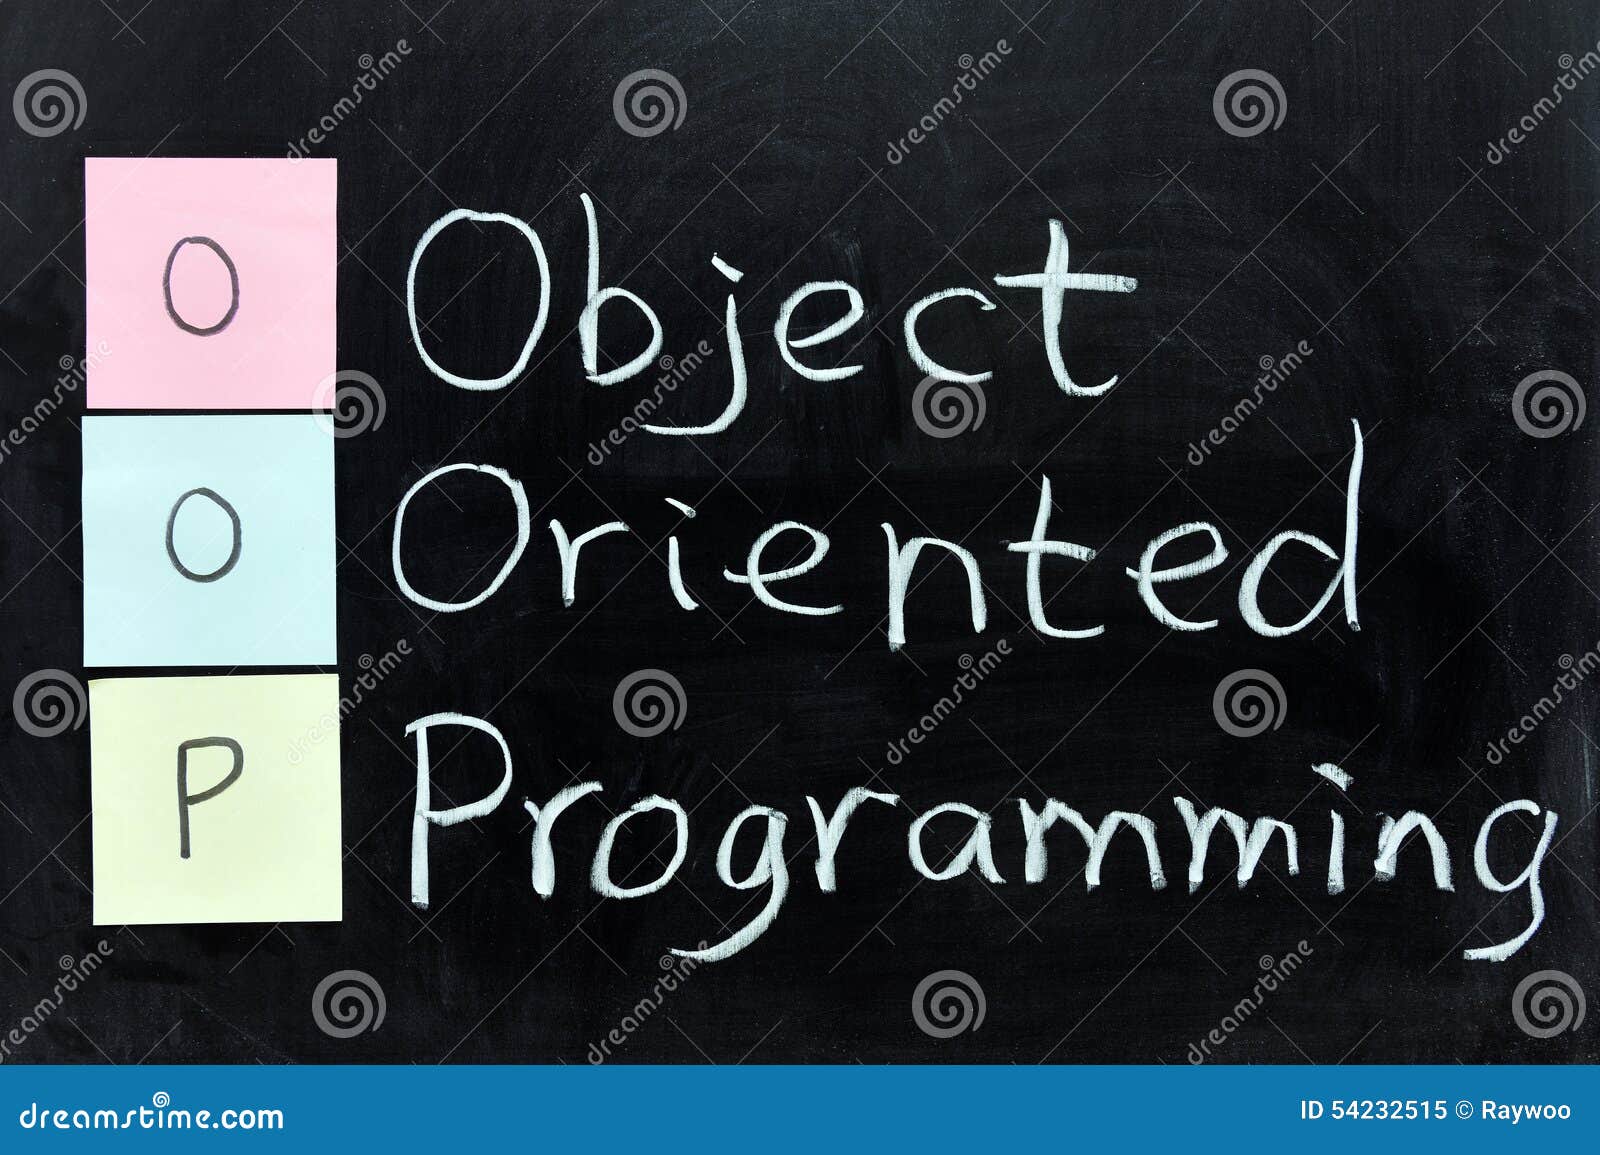 oop, object oriented programming